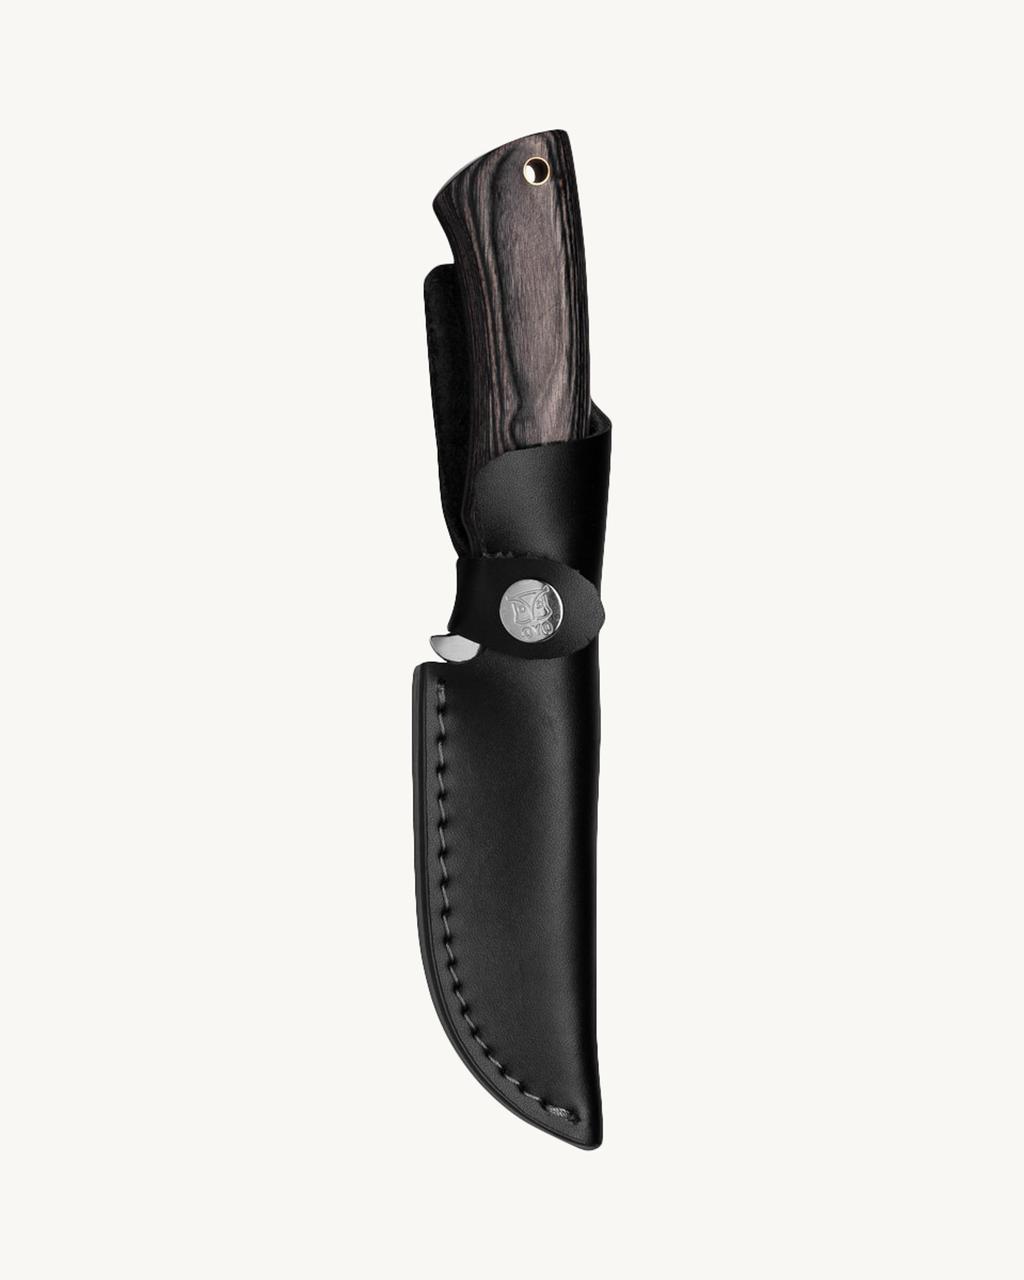 Tuv Knife w/leather sheath